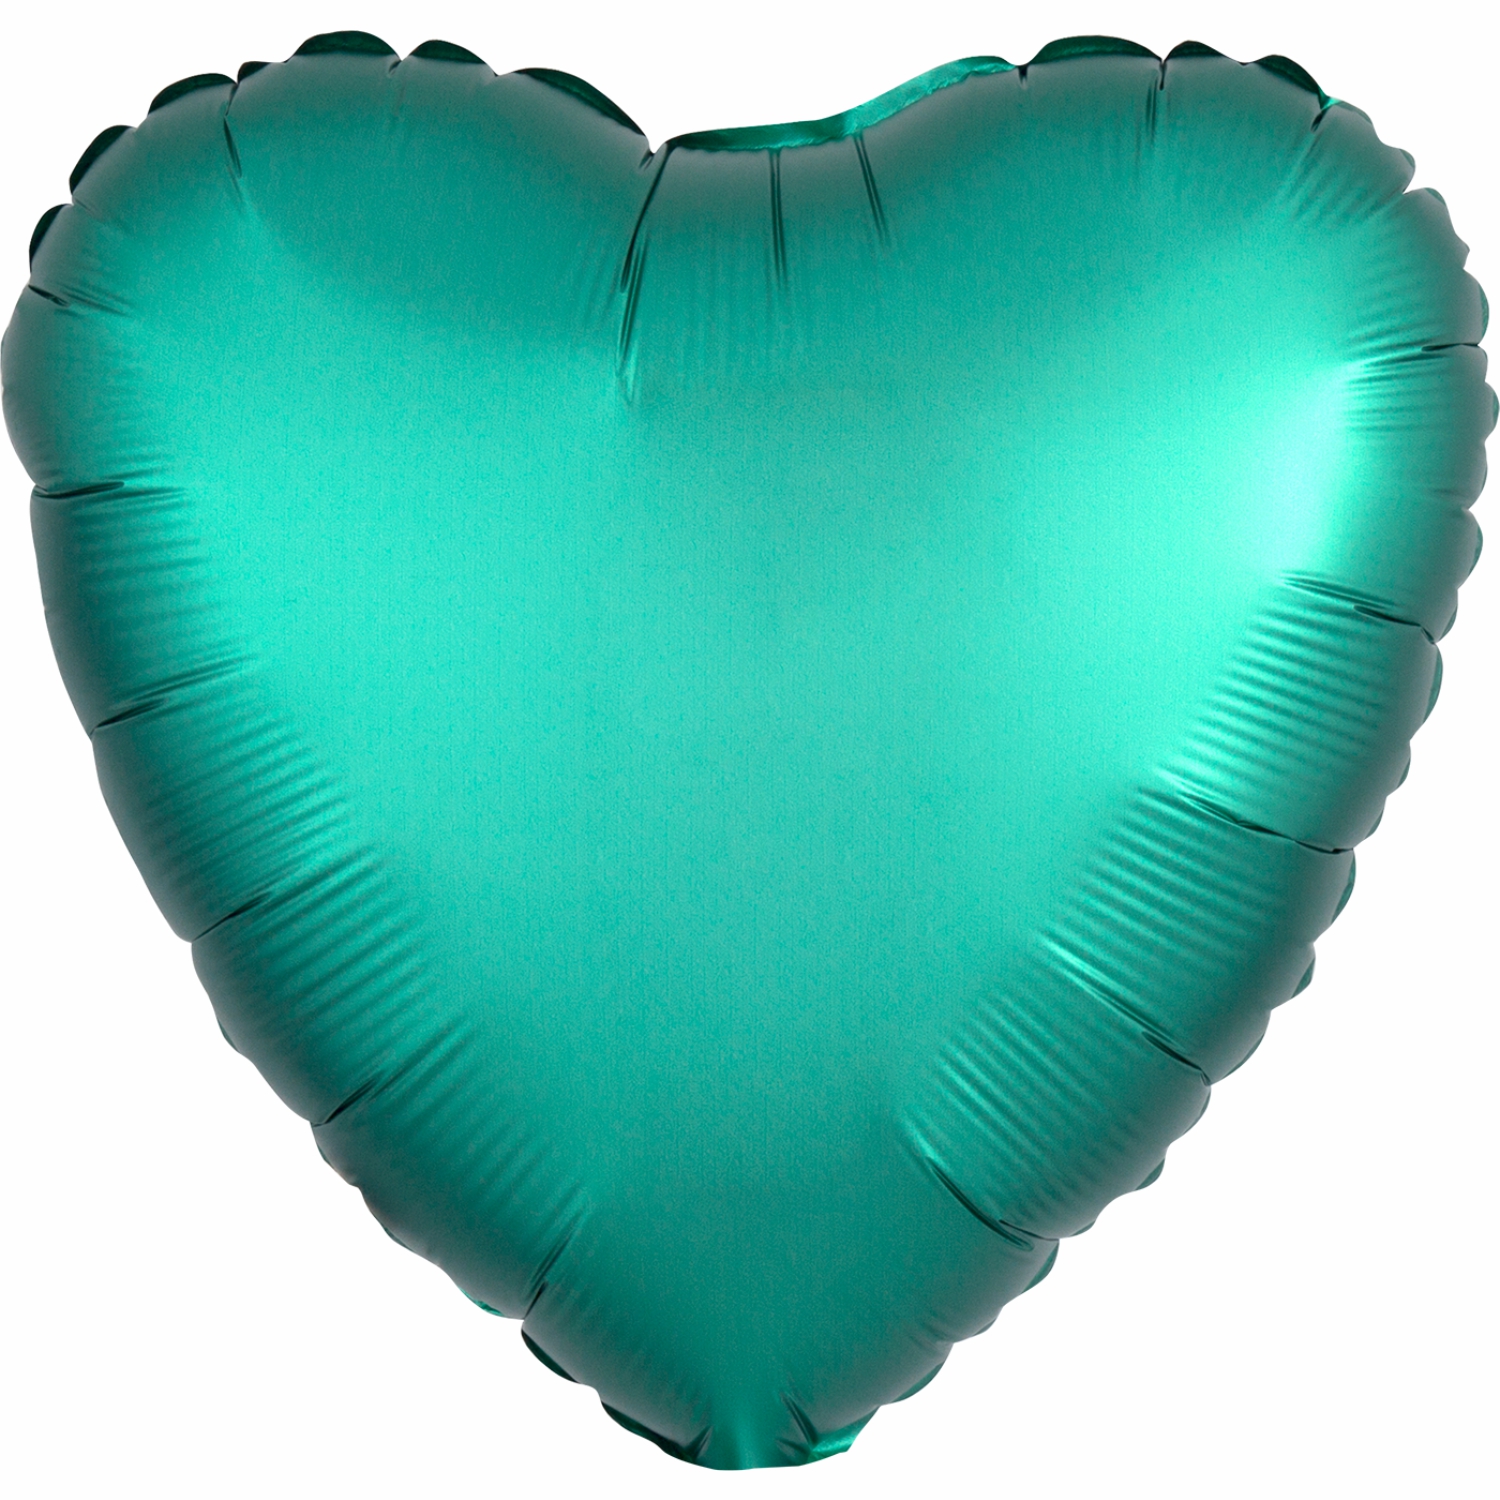 http://images.officebrain.com/migration-api-hidden-new/web/images/626/myrn-heart-jade-green.jpg